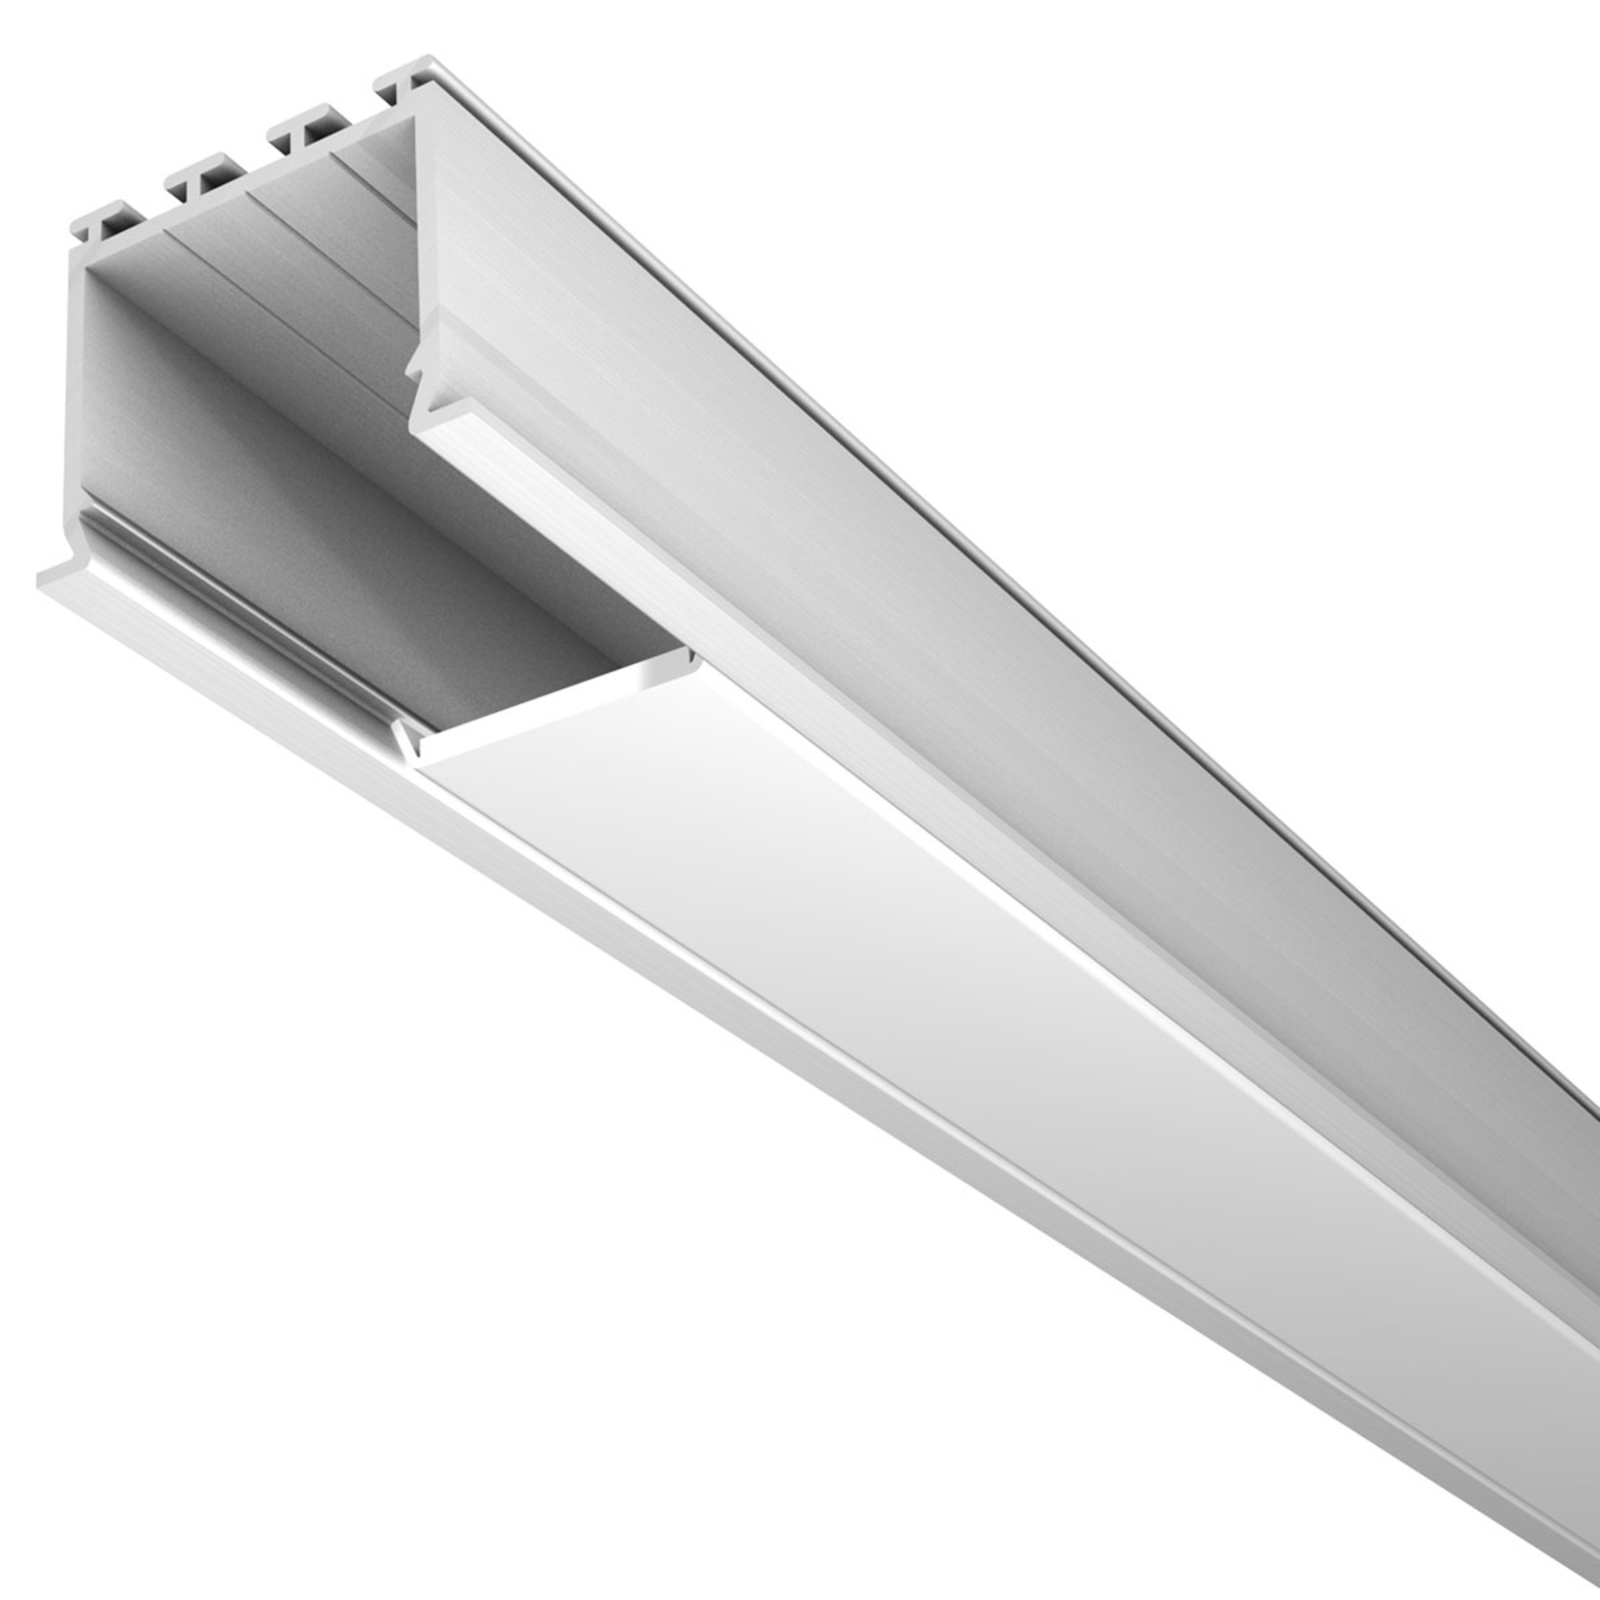 M24 LED alu profil 30 mm széles betolható profil